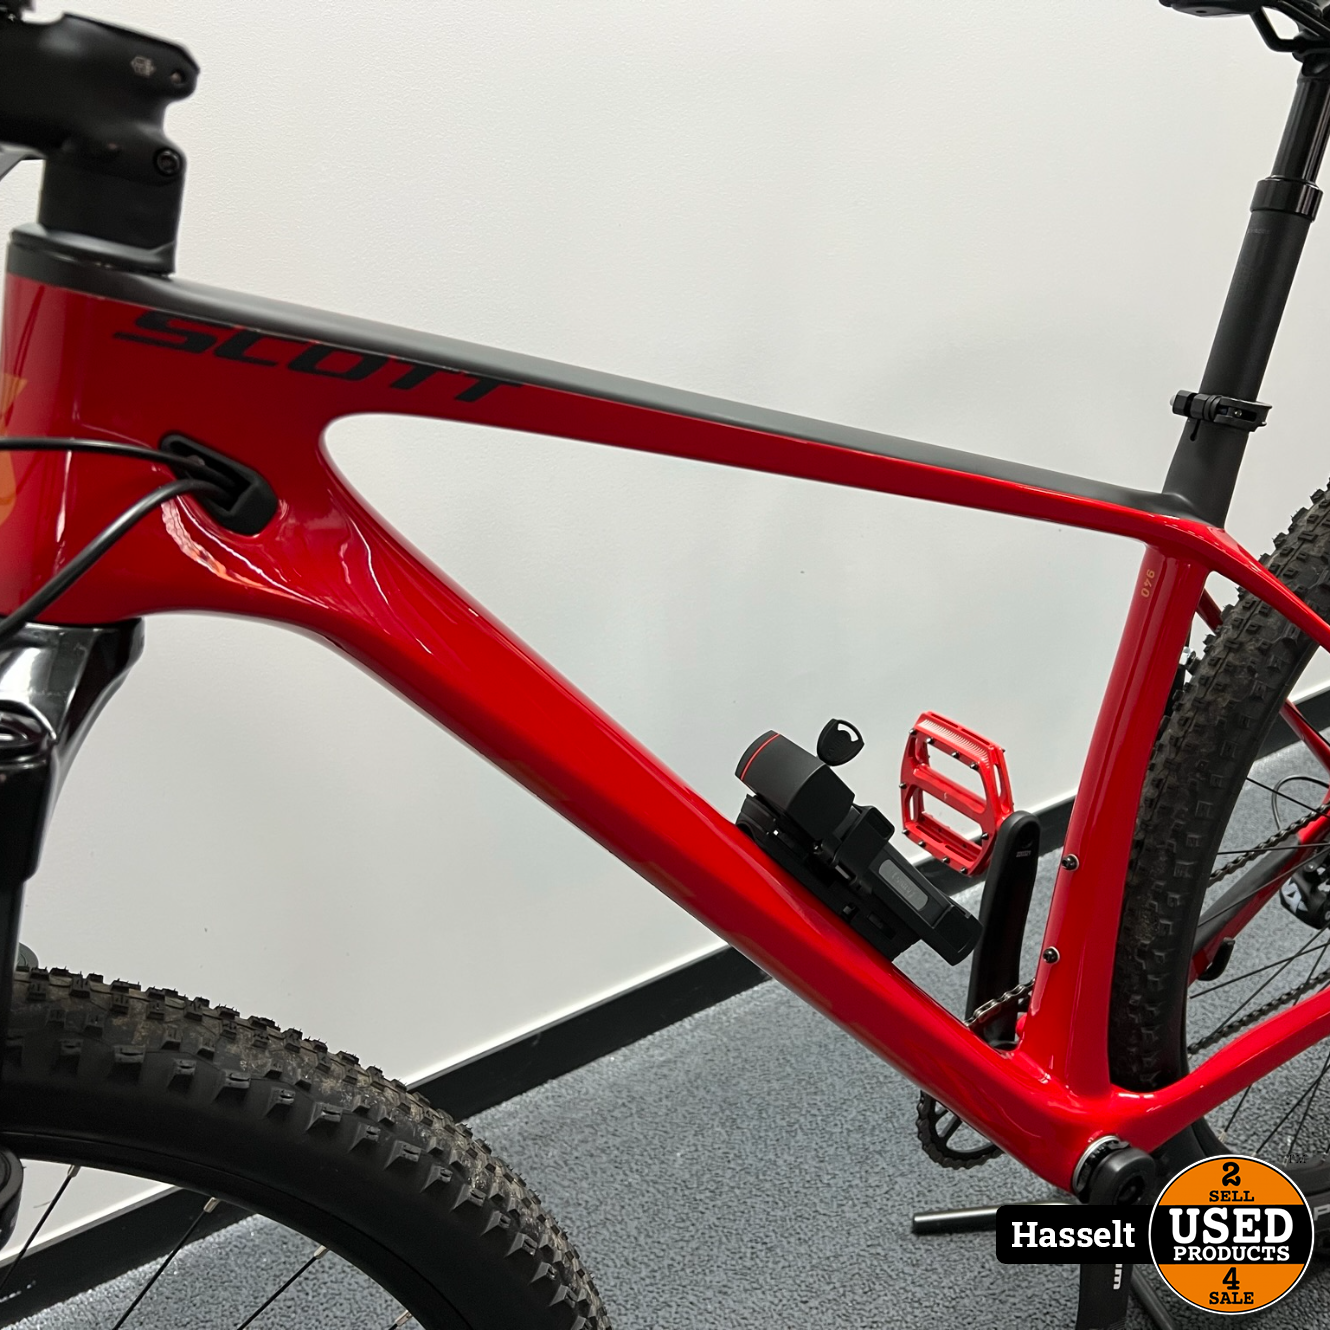 Scott 940 Mountainbike - NIEUW (Large) - Used Products Hasselt